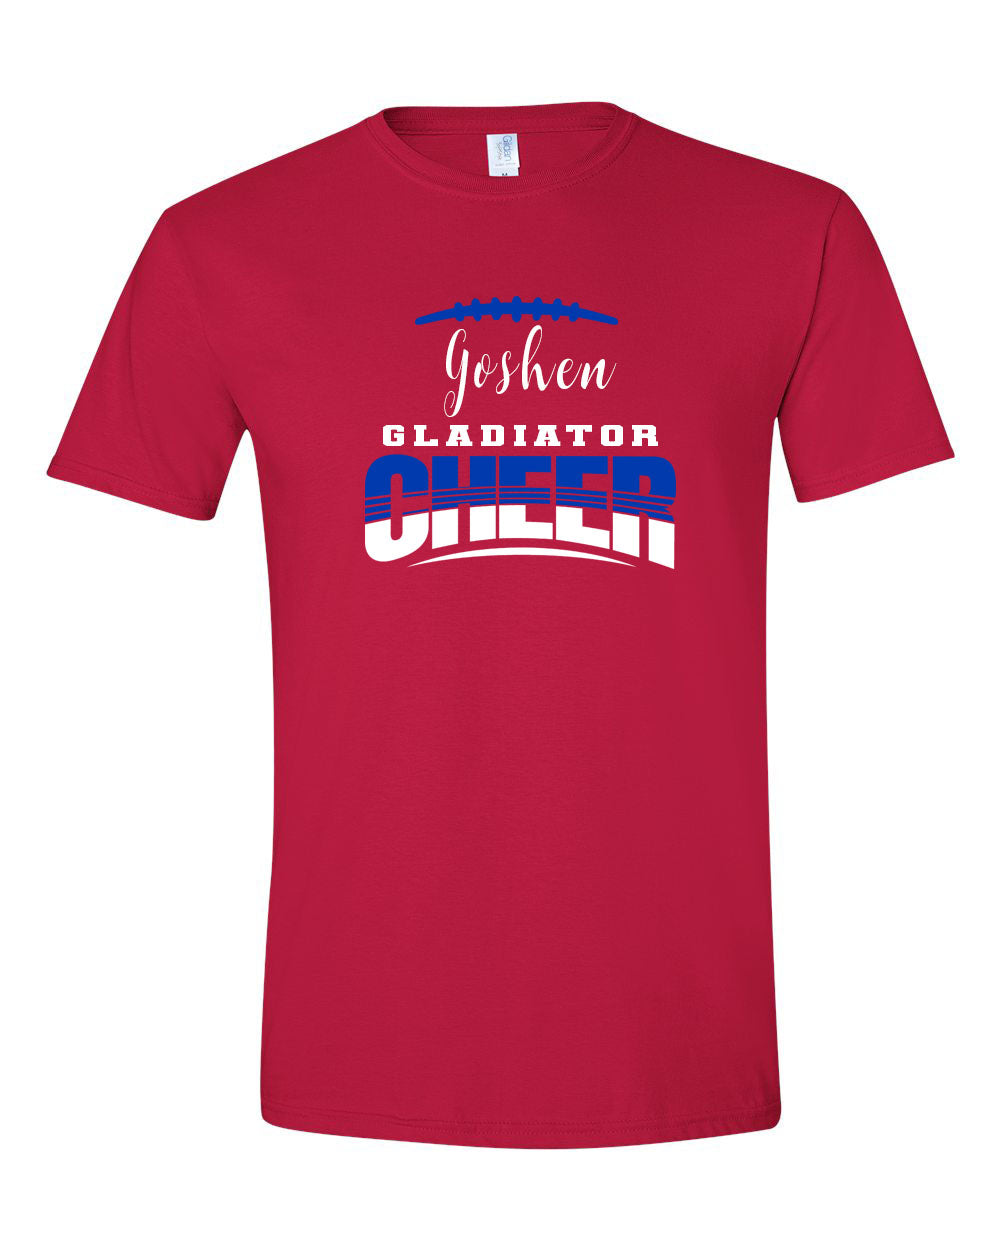 Goshen Cheer Design 4 T-Shirt